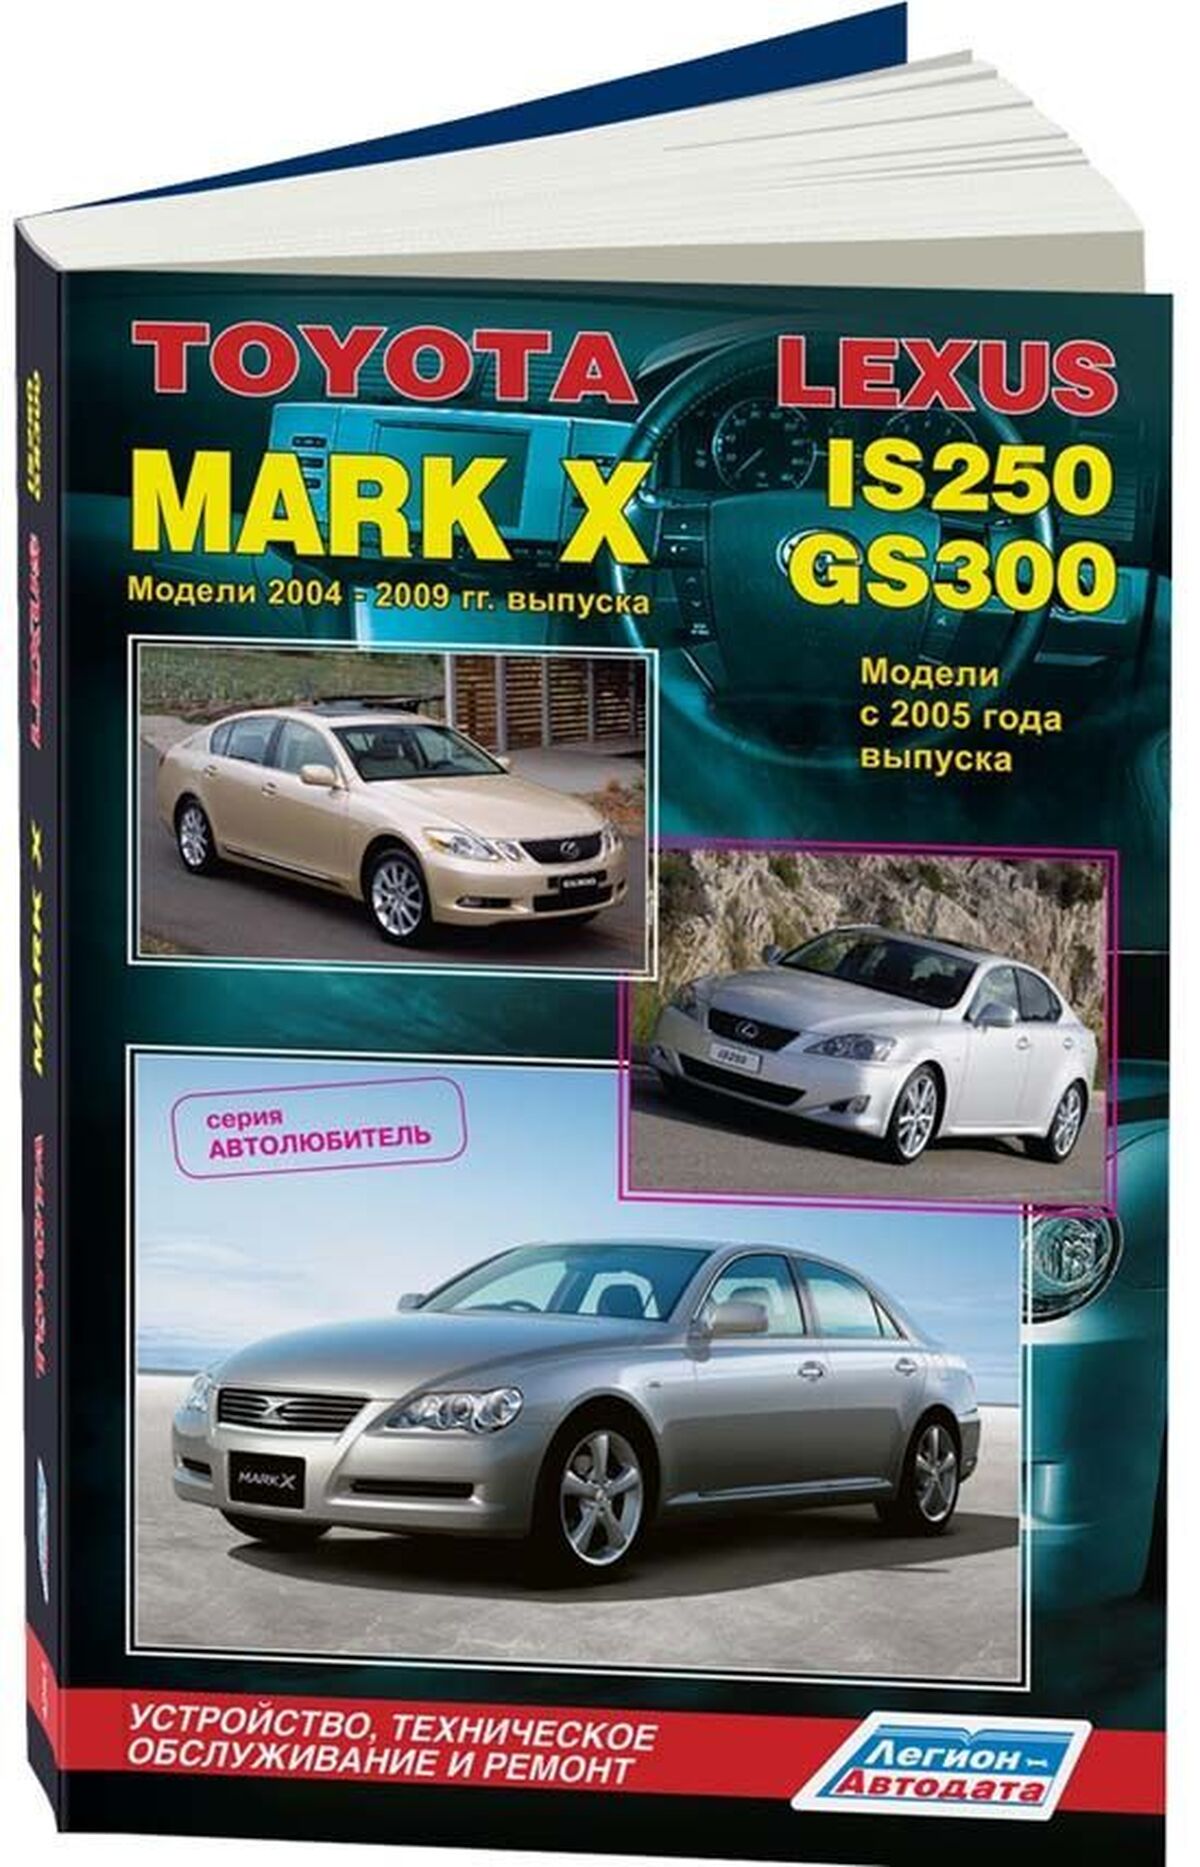 Книга: TOYOTA MARK X / LEXUS IS250 / LEXUS GS300 (б) с 2004 г.в., рем., экспл., то | Легион-Aвтодата